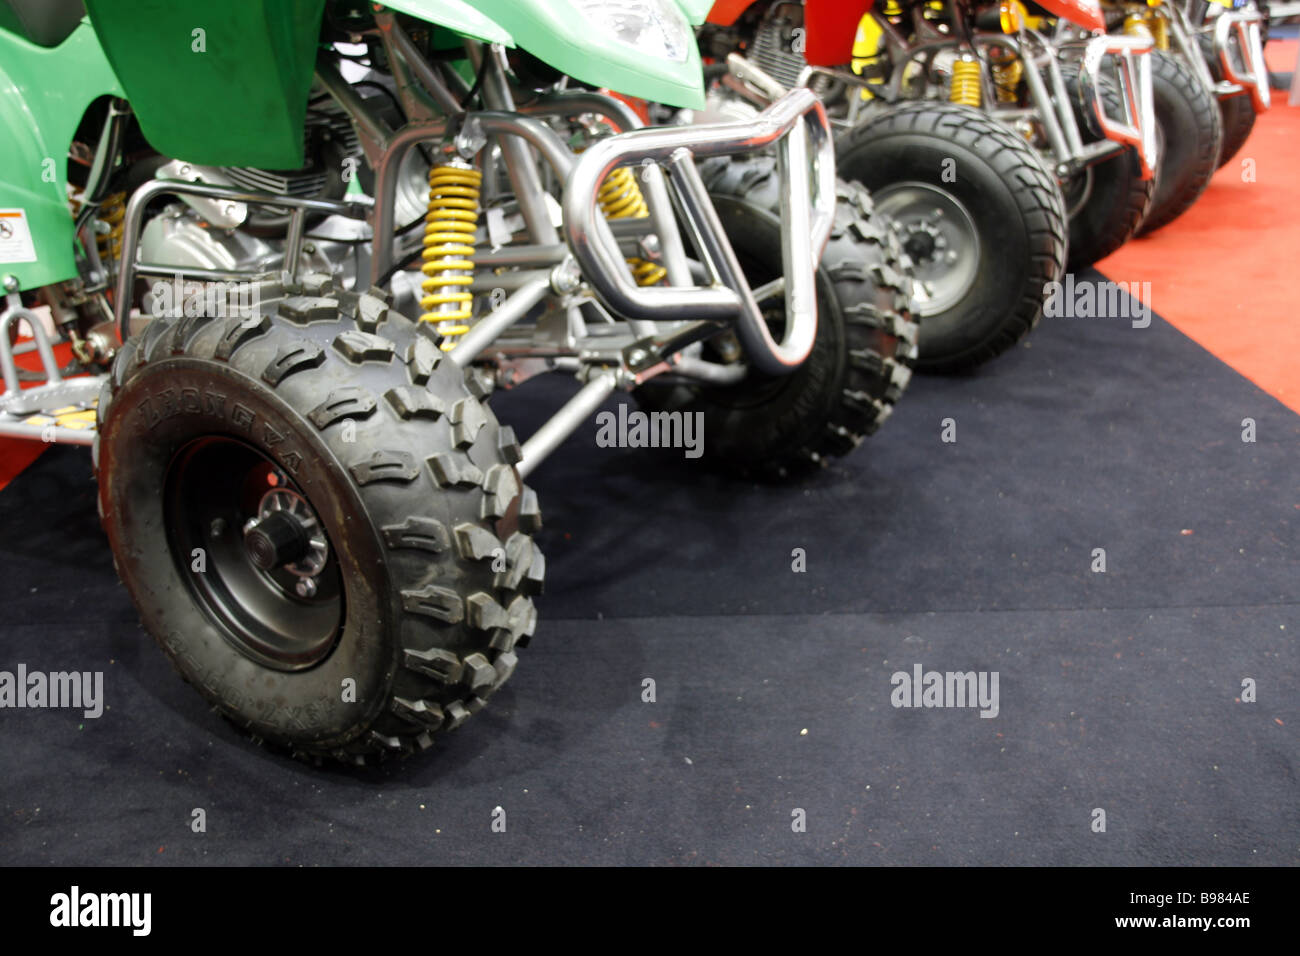 motorbikes at motor show Stock Photo